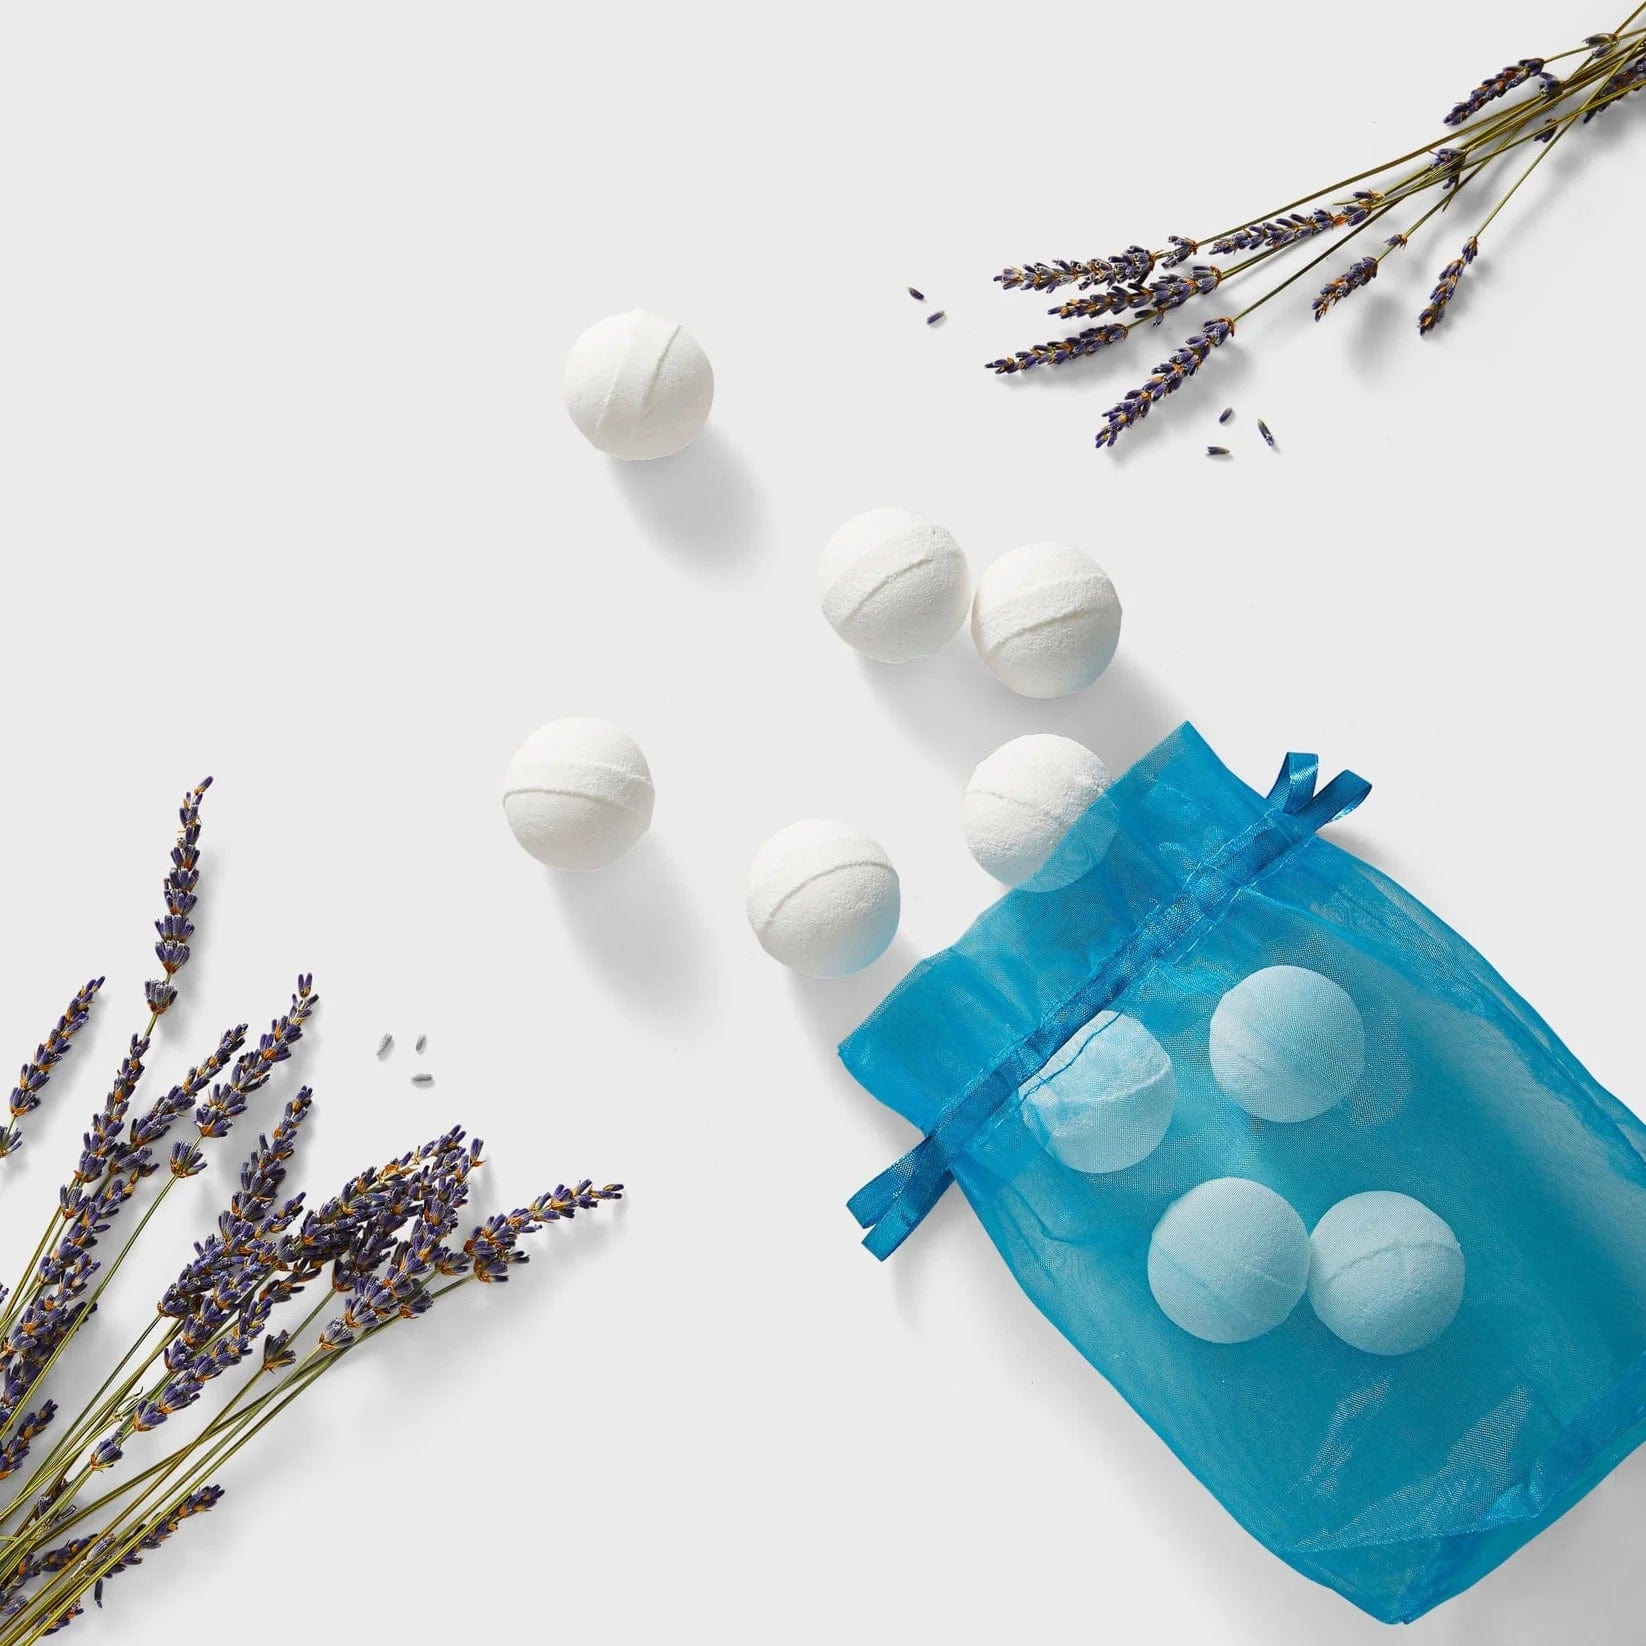 Lea Black Beauty® CBD bath bombs in a bag next to fresh lavender